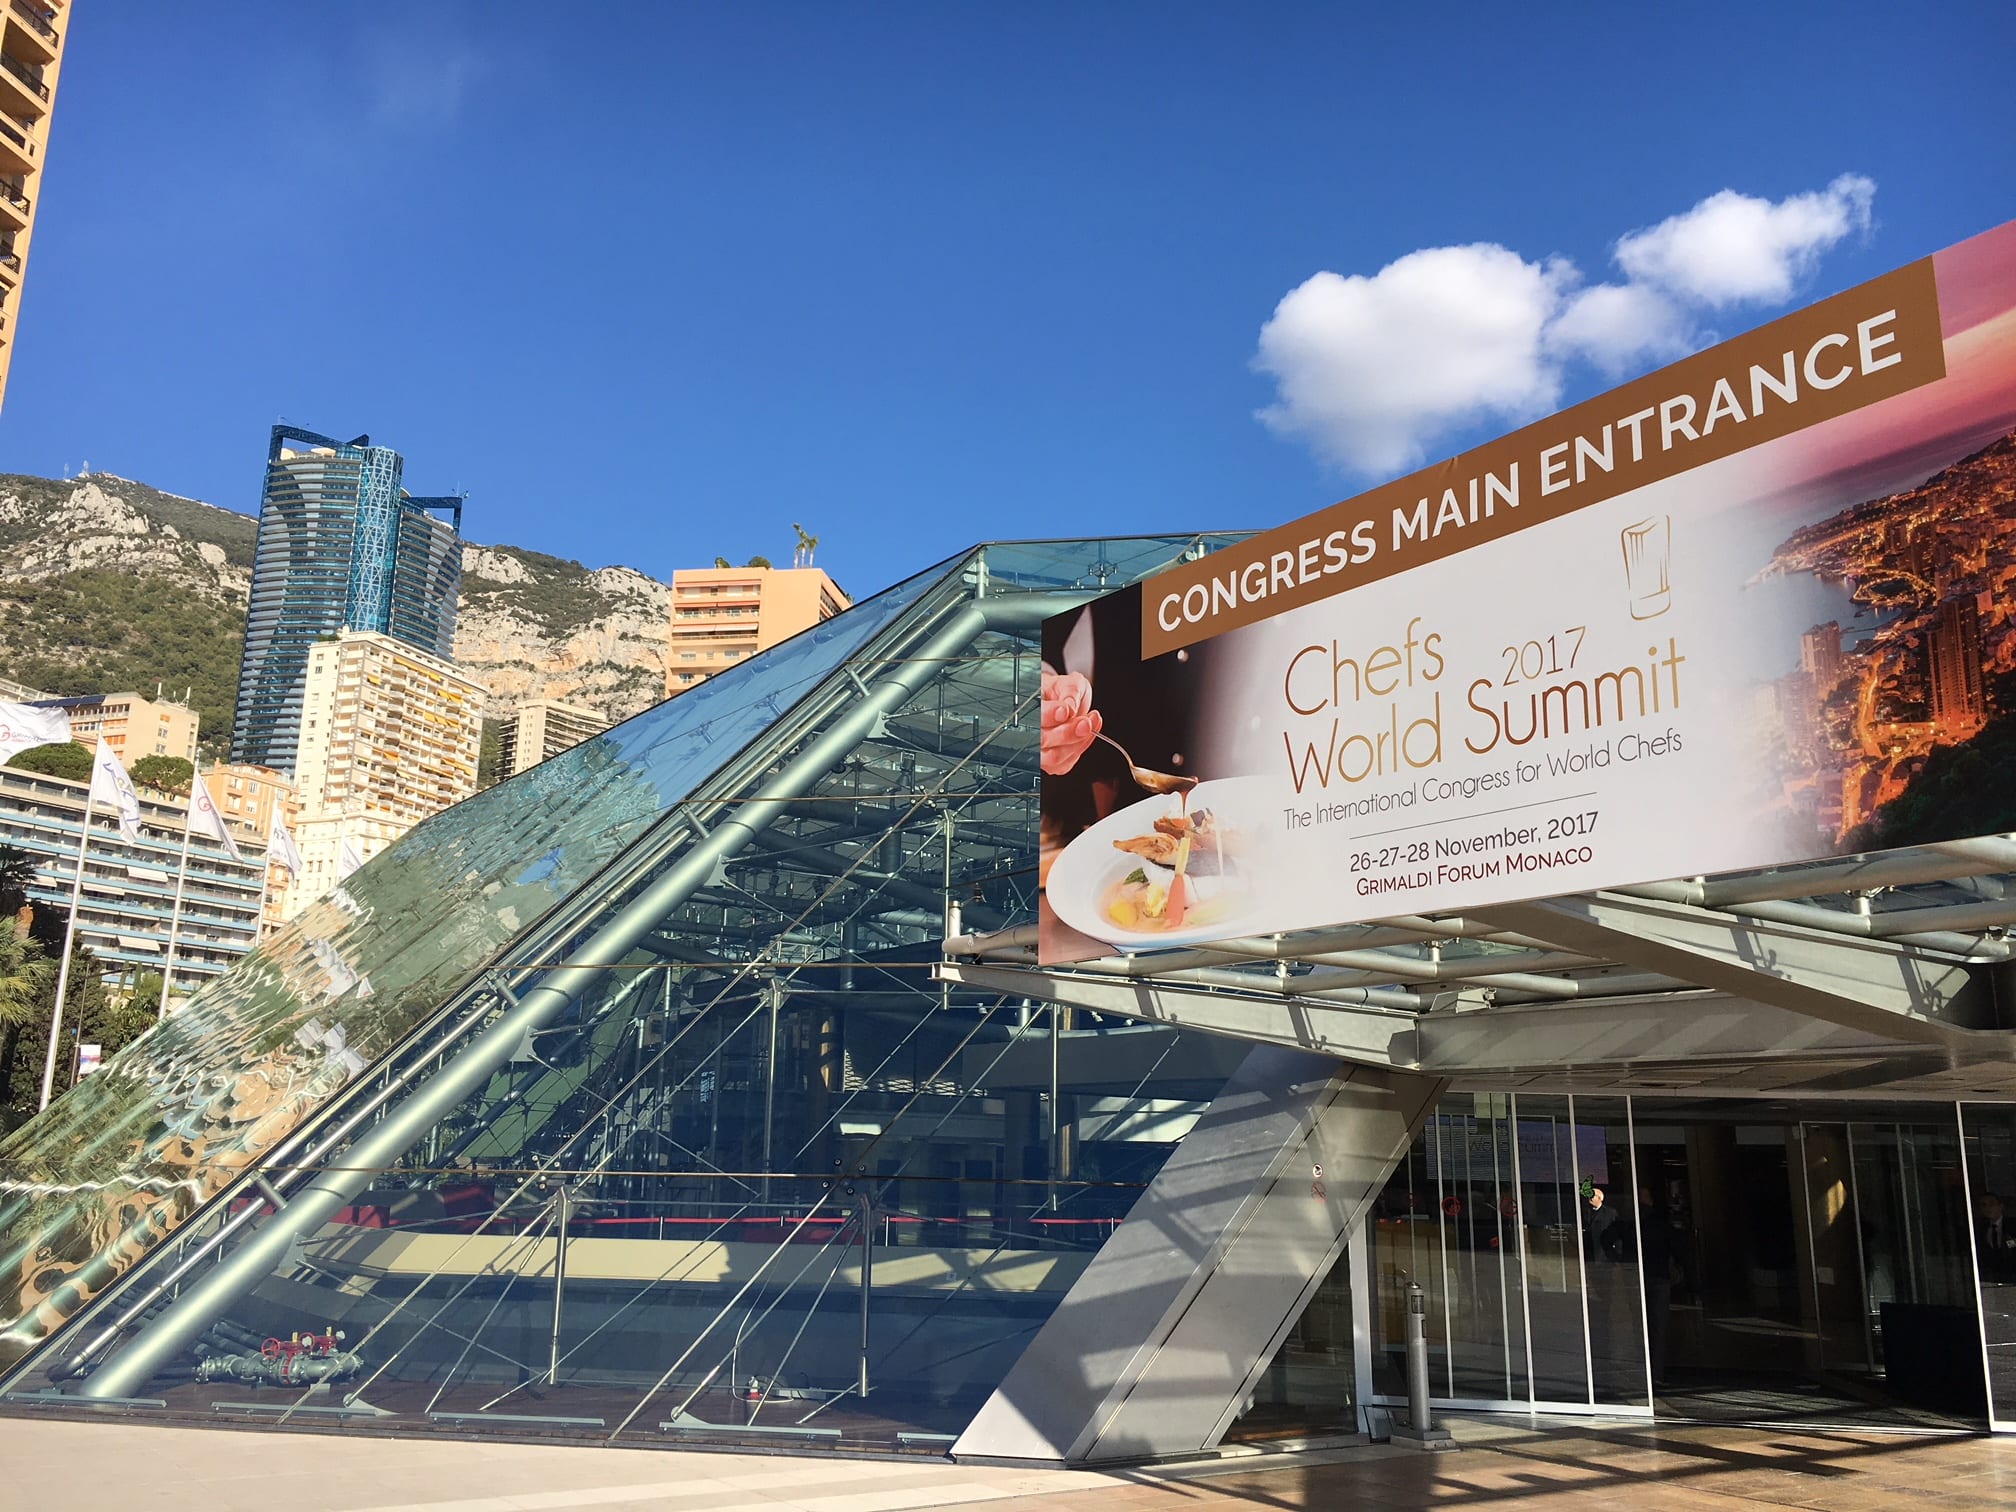 IMG 6874 Rochini meets Chefs World Summit 2017 in Monaco